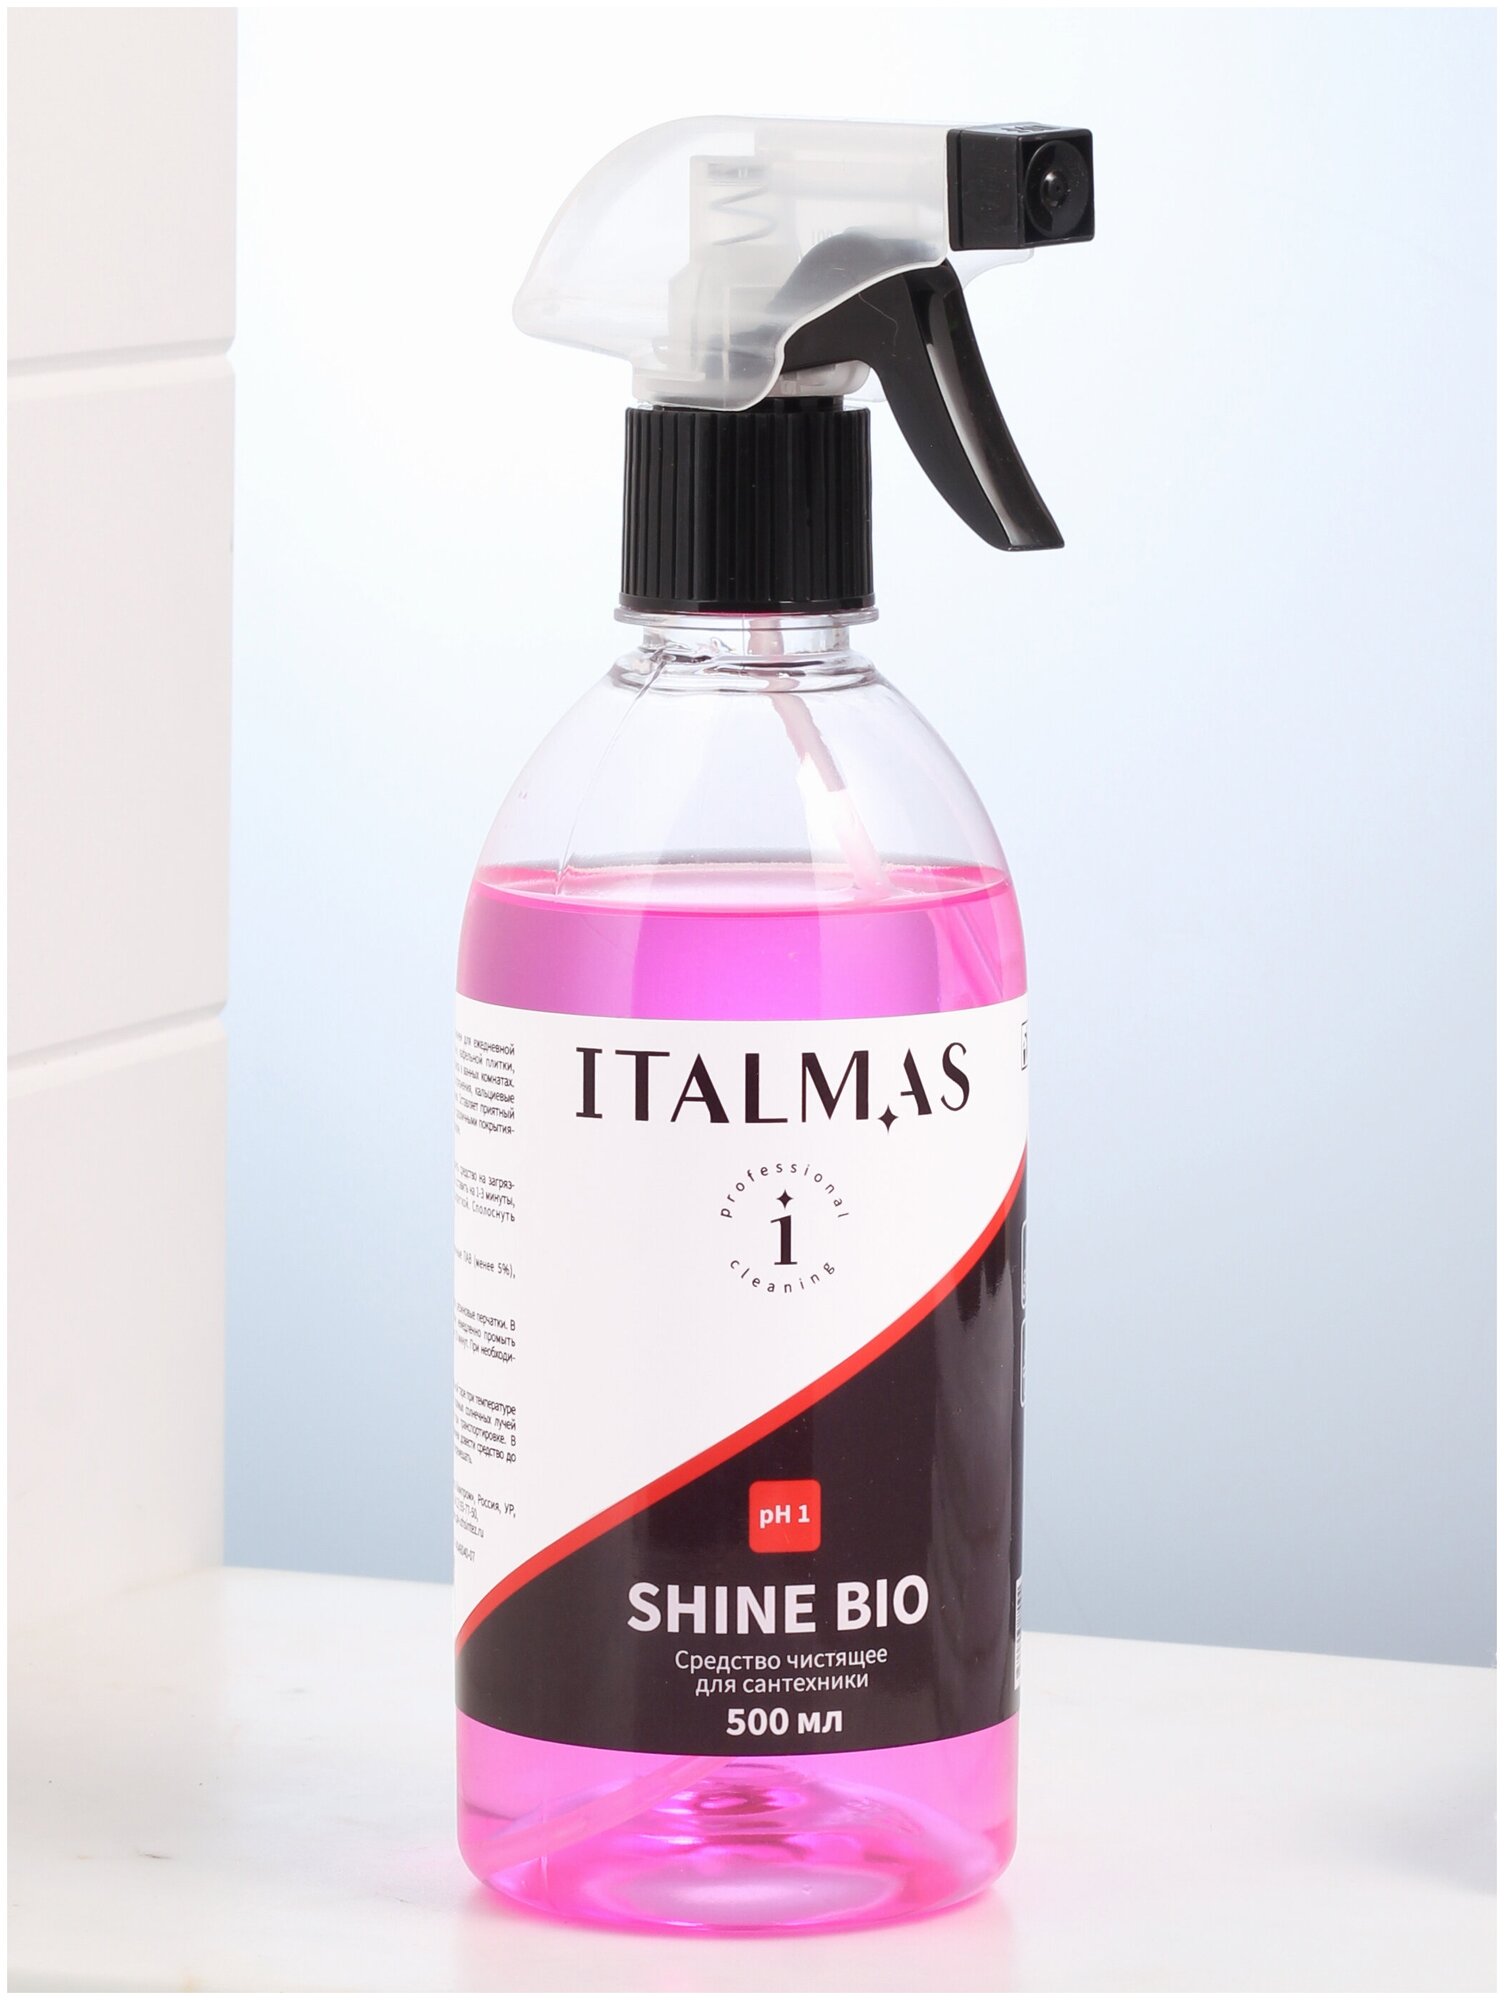 Спрей чистящий Shine Bio для сантехники / Italmas Professional cleaning